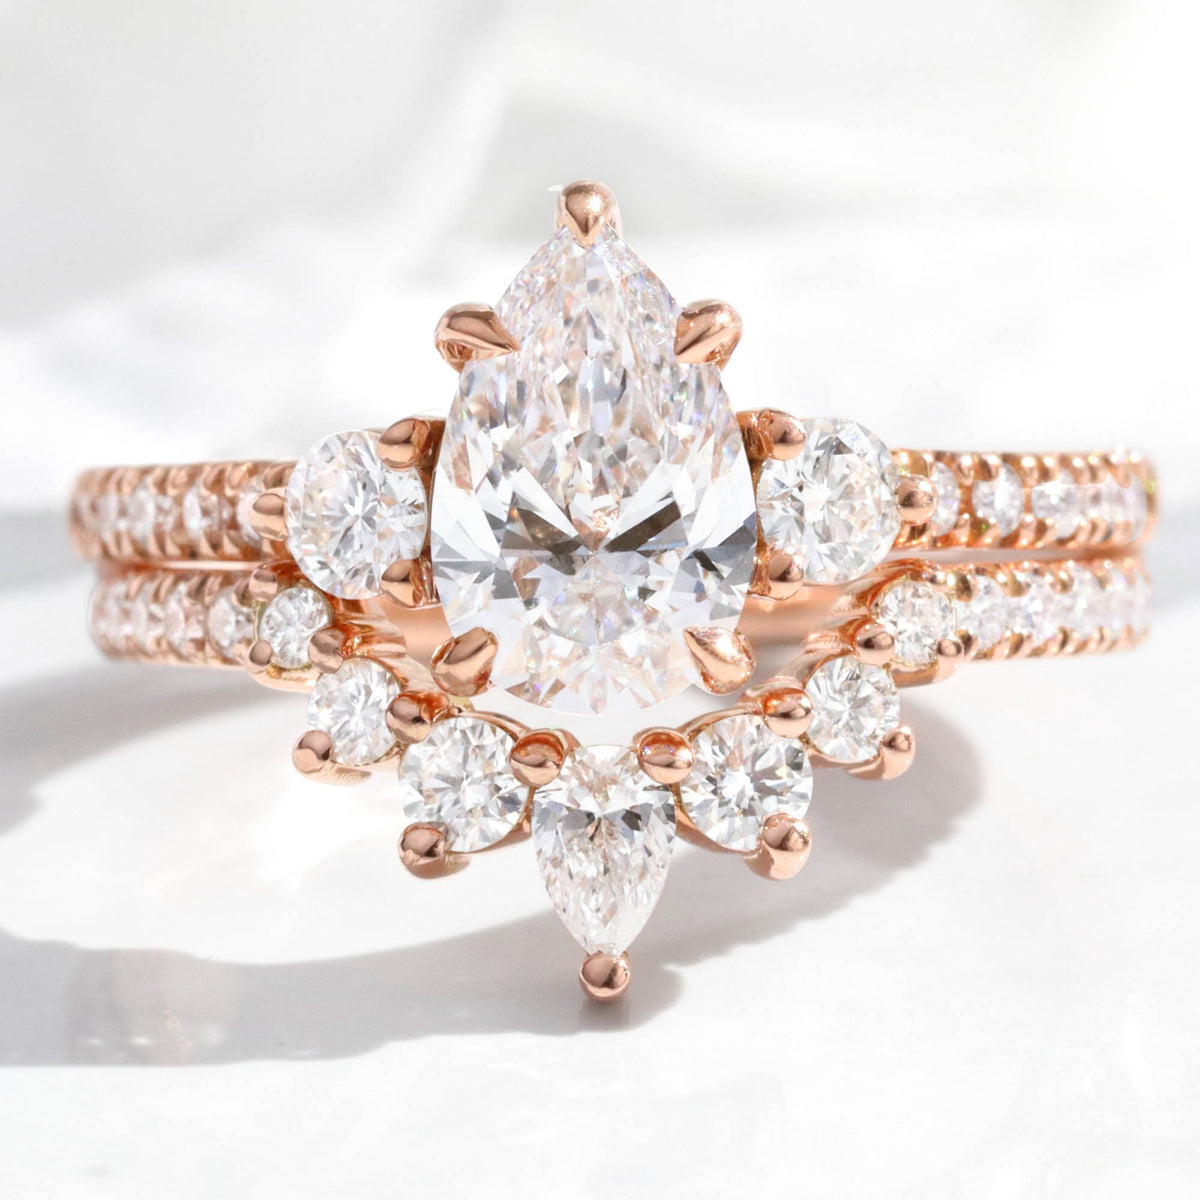 Pear lab diamond 3 stone ring bridal set rose gold U shaped diamond wedding band la more design jewelry